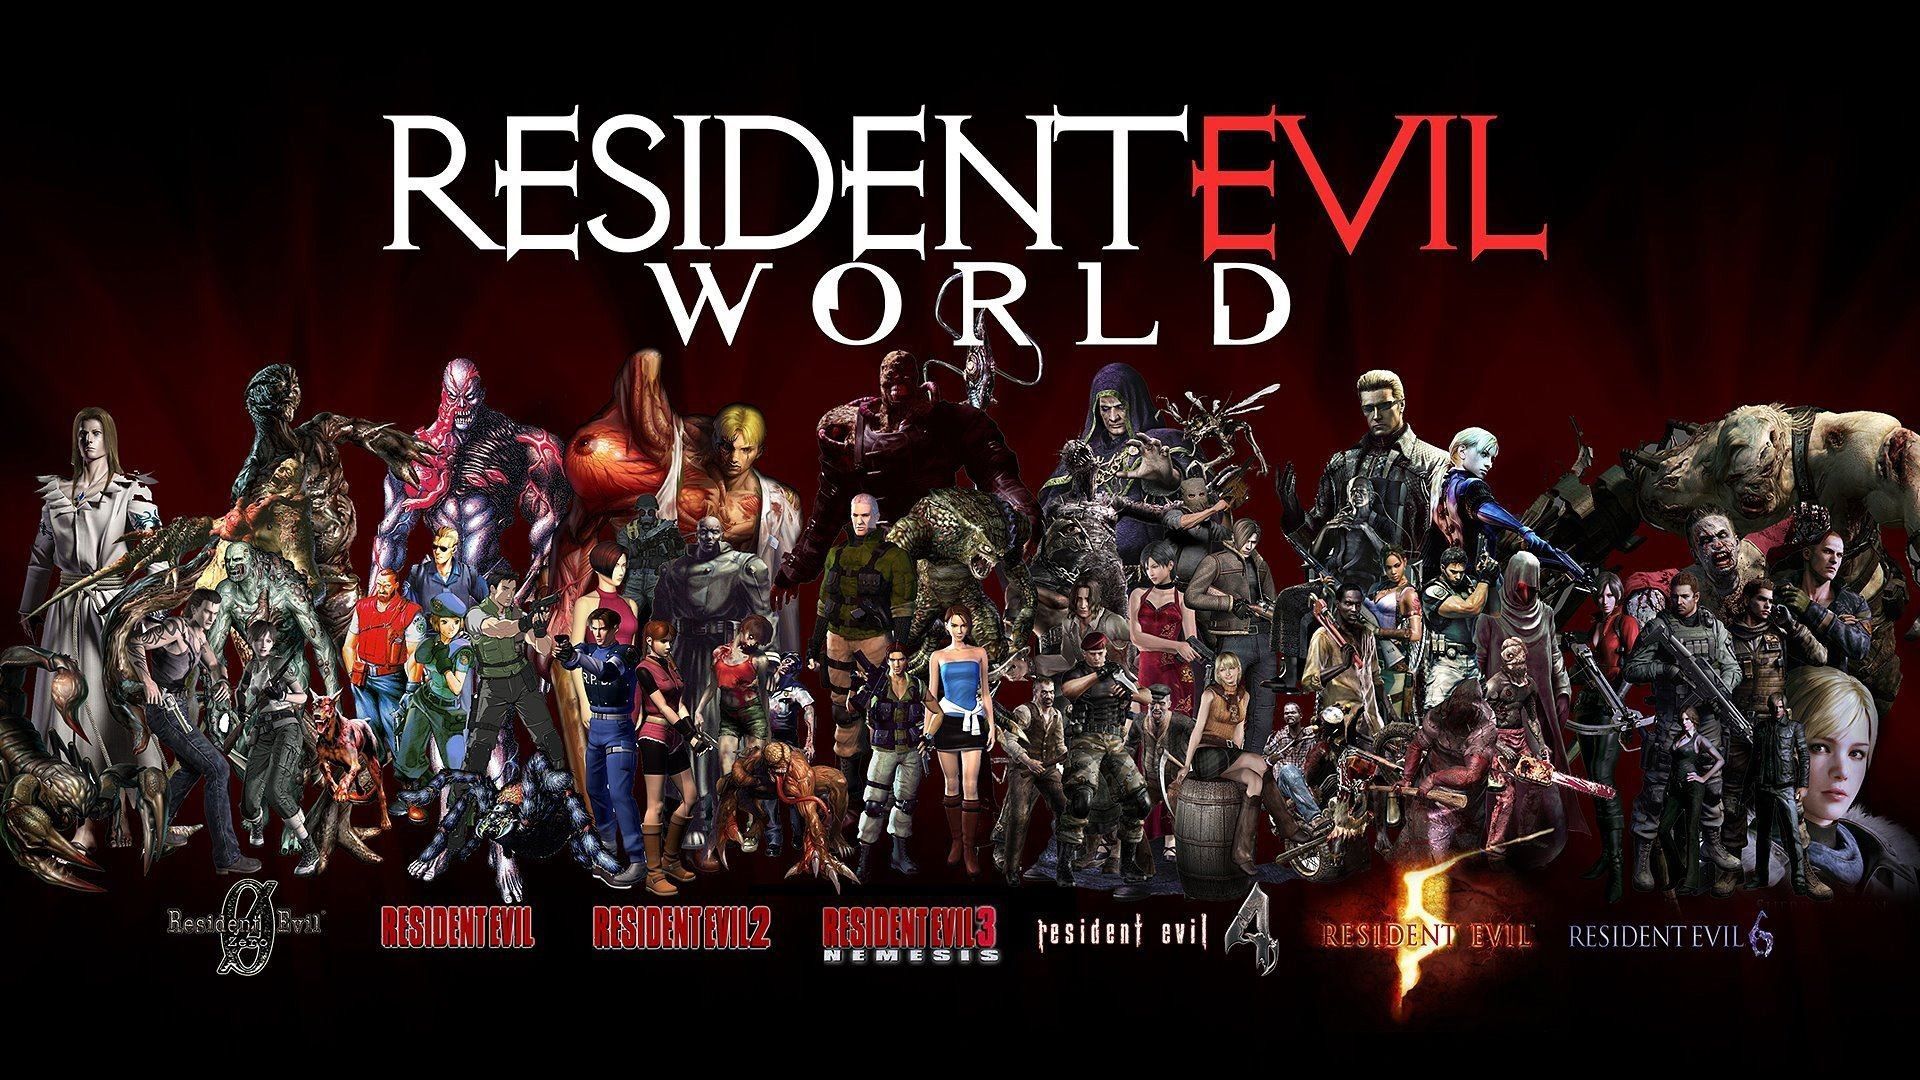 Image for Free Resident Evil World HD Wallpaper. แฟนพันธุ์แท้